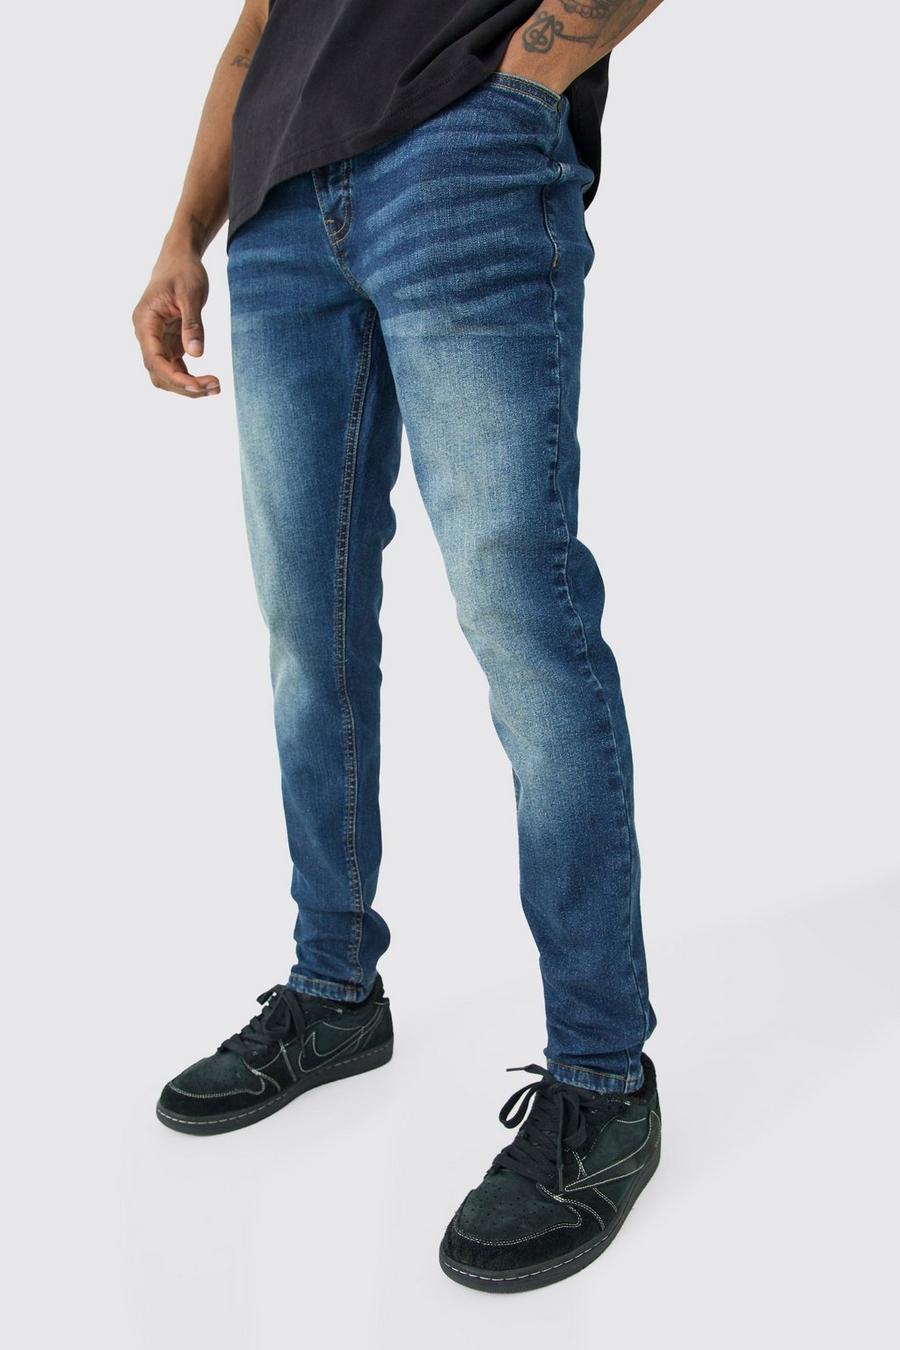 Jeans Tall Skinny Fit Stretch in blu antico, Antique blue